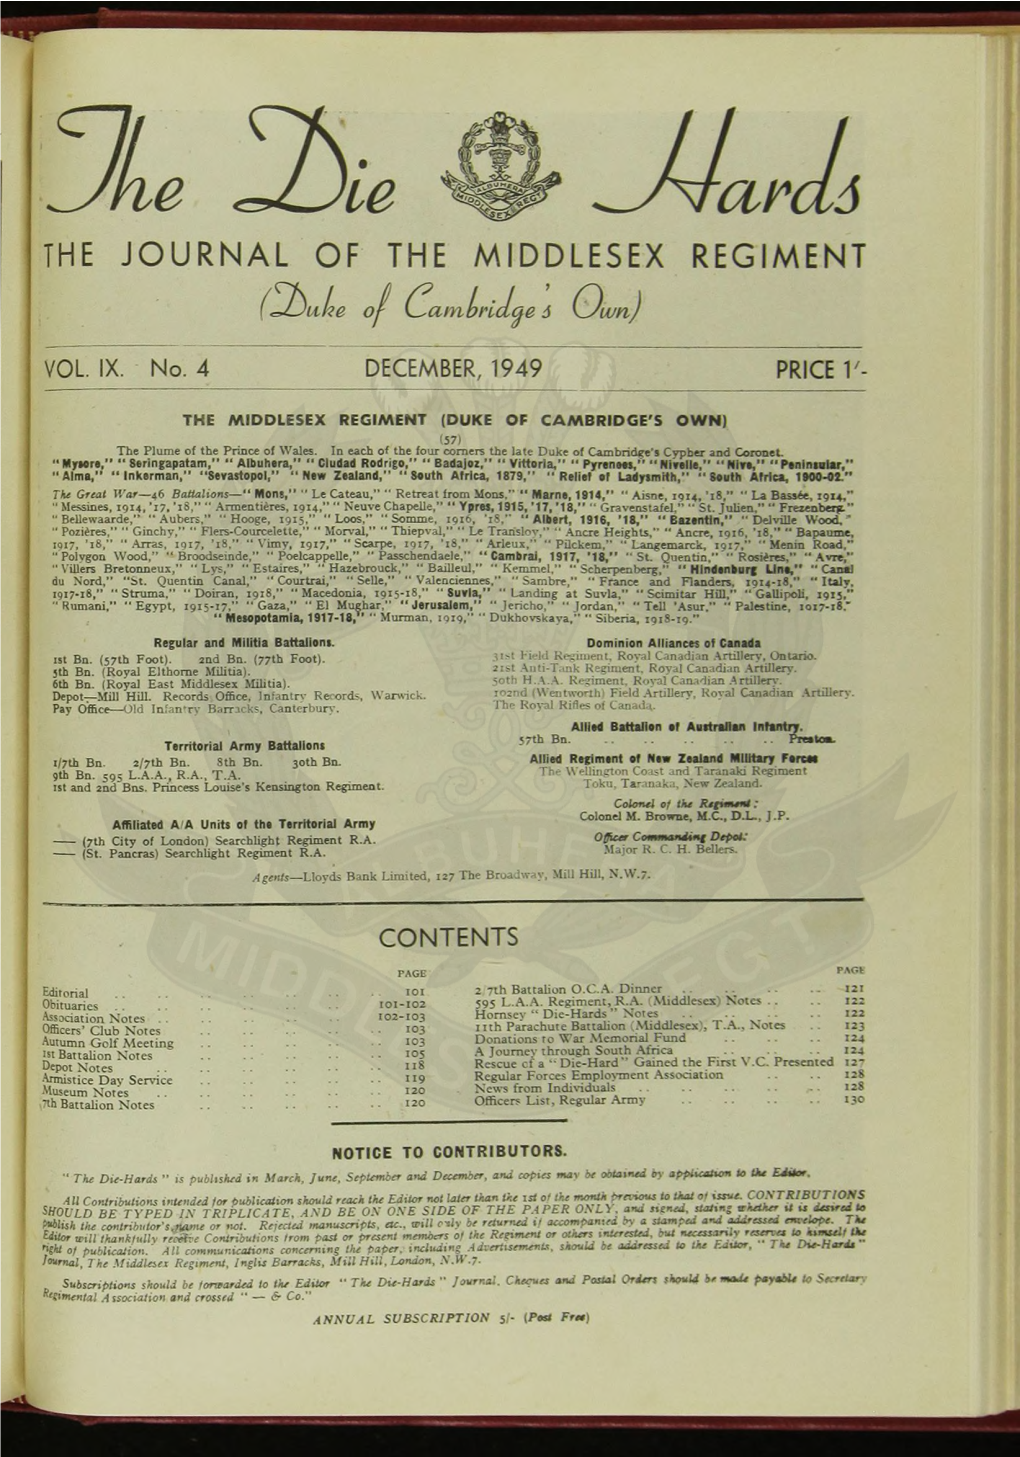 ^ Á R a R D Ó the JOURNAL of the MIDDLESEX REGIMENT